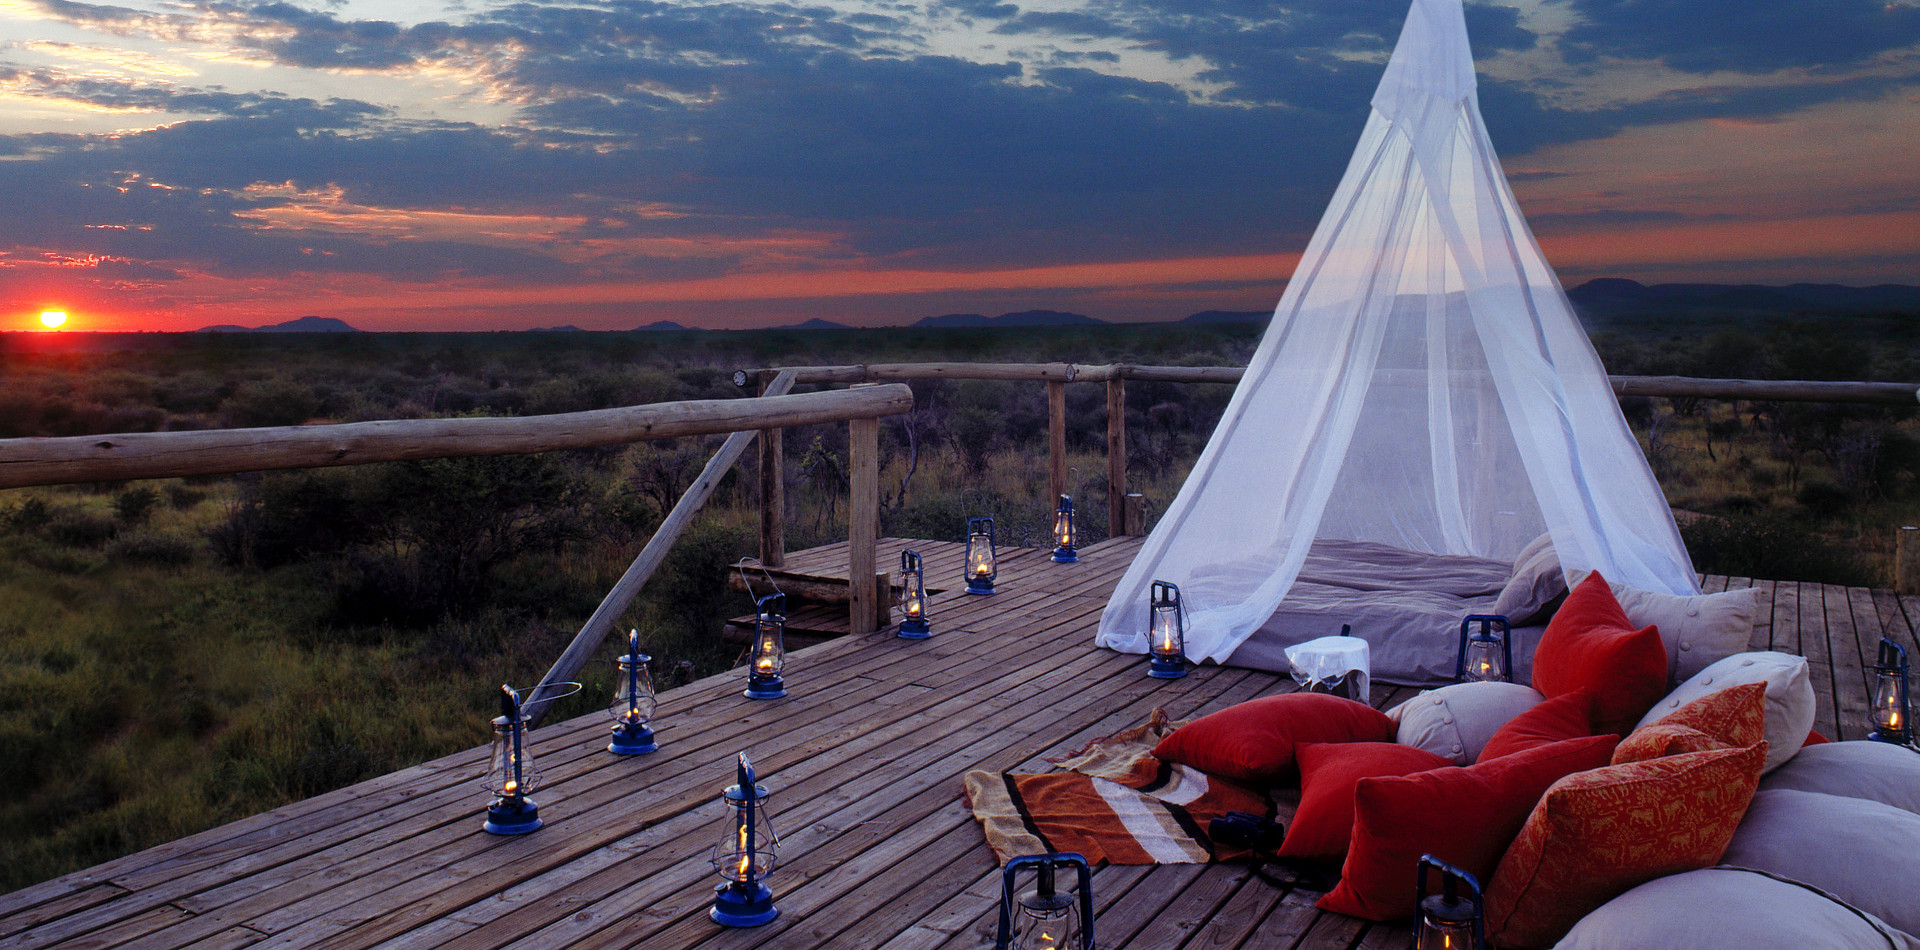 Sanctuary Makanyane Safari Lodge Südafrika, Lodge in Südafrika, Luxusreise Südafrika, Individualreise Südafrika